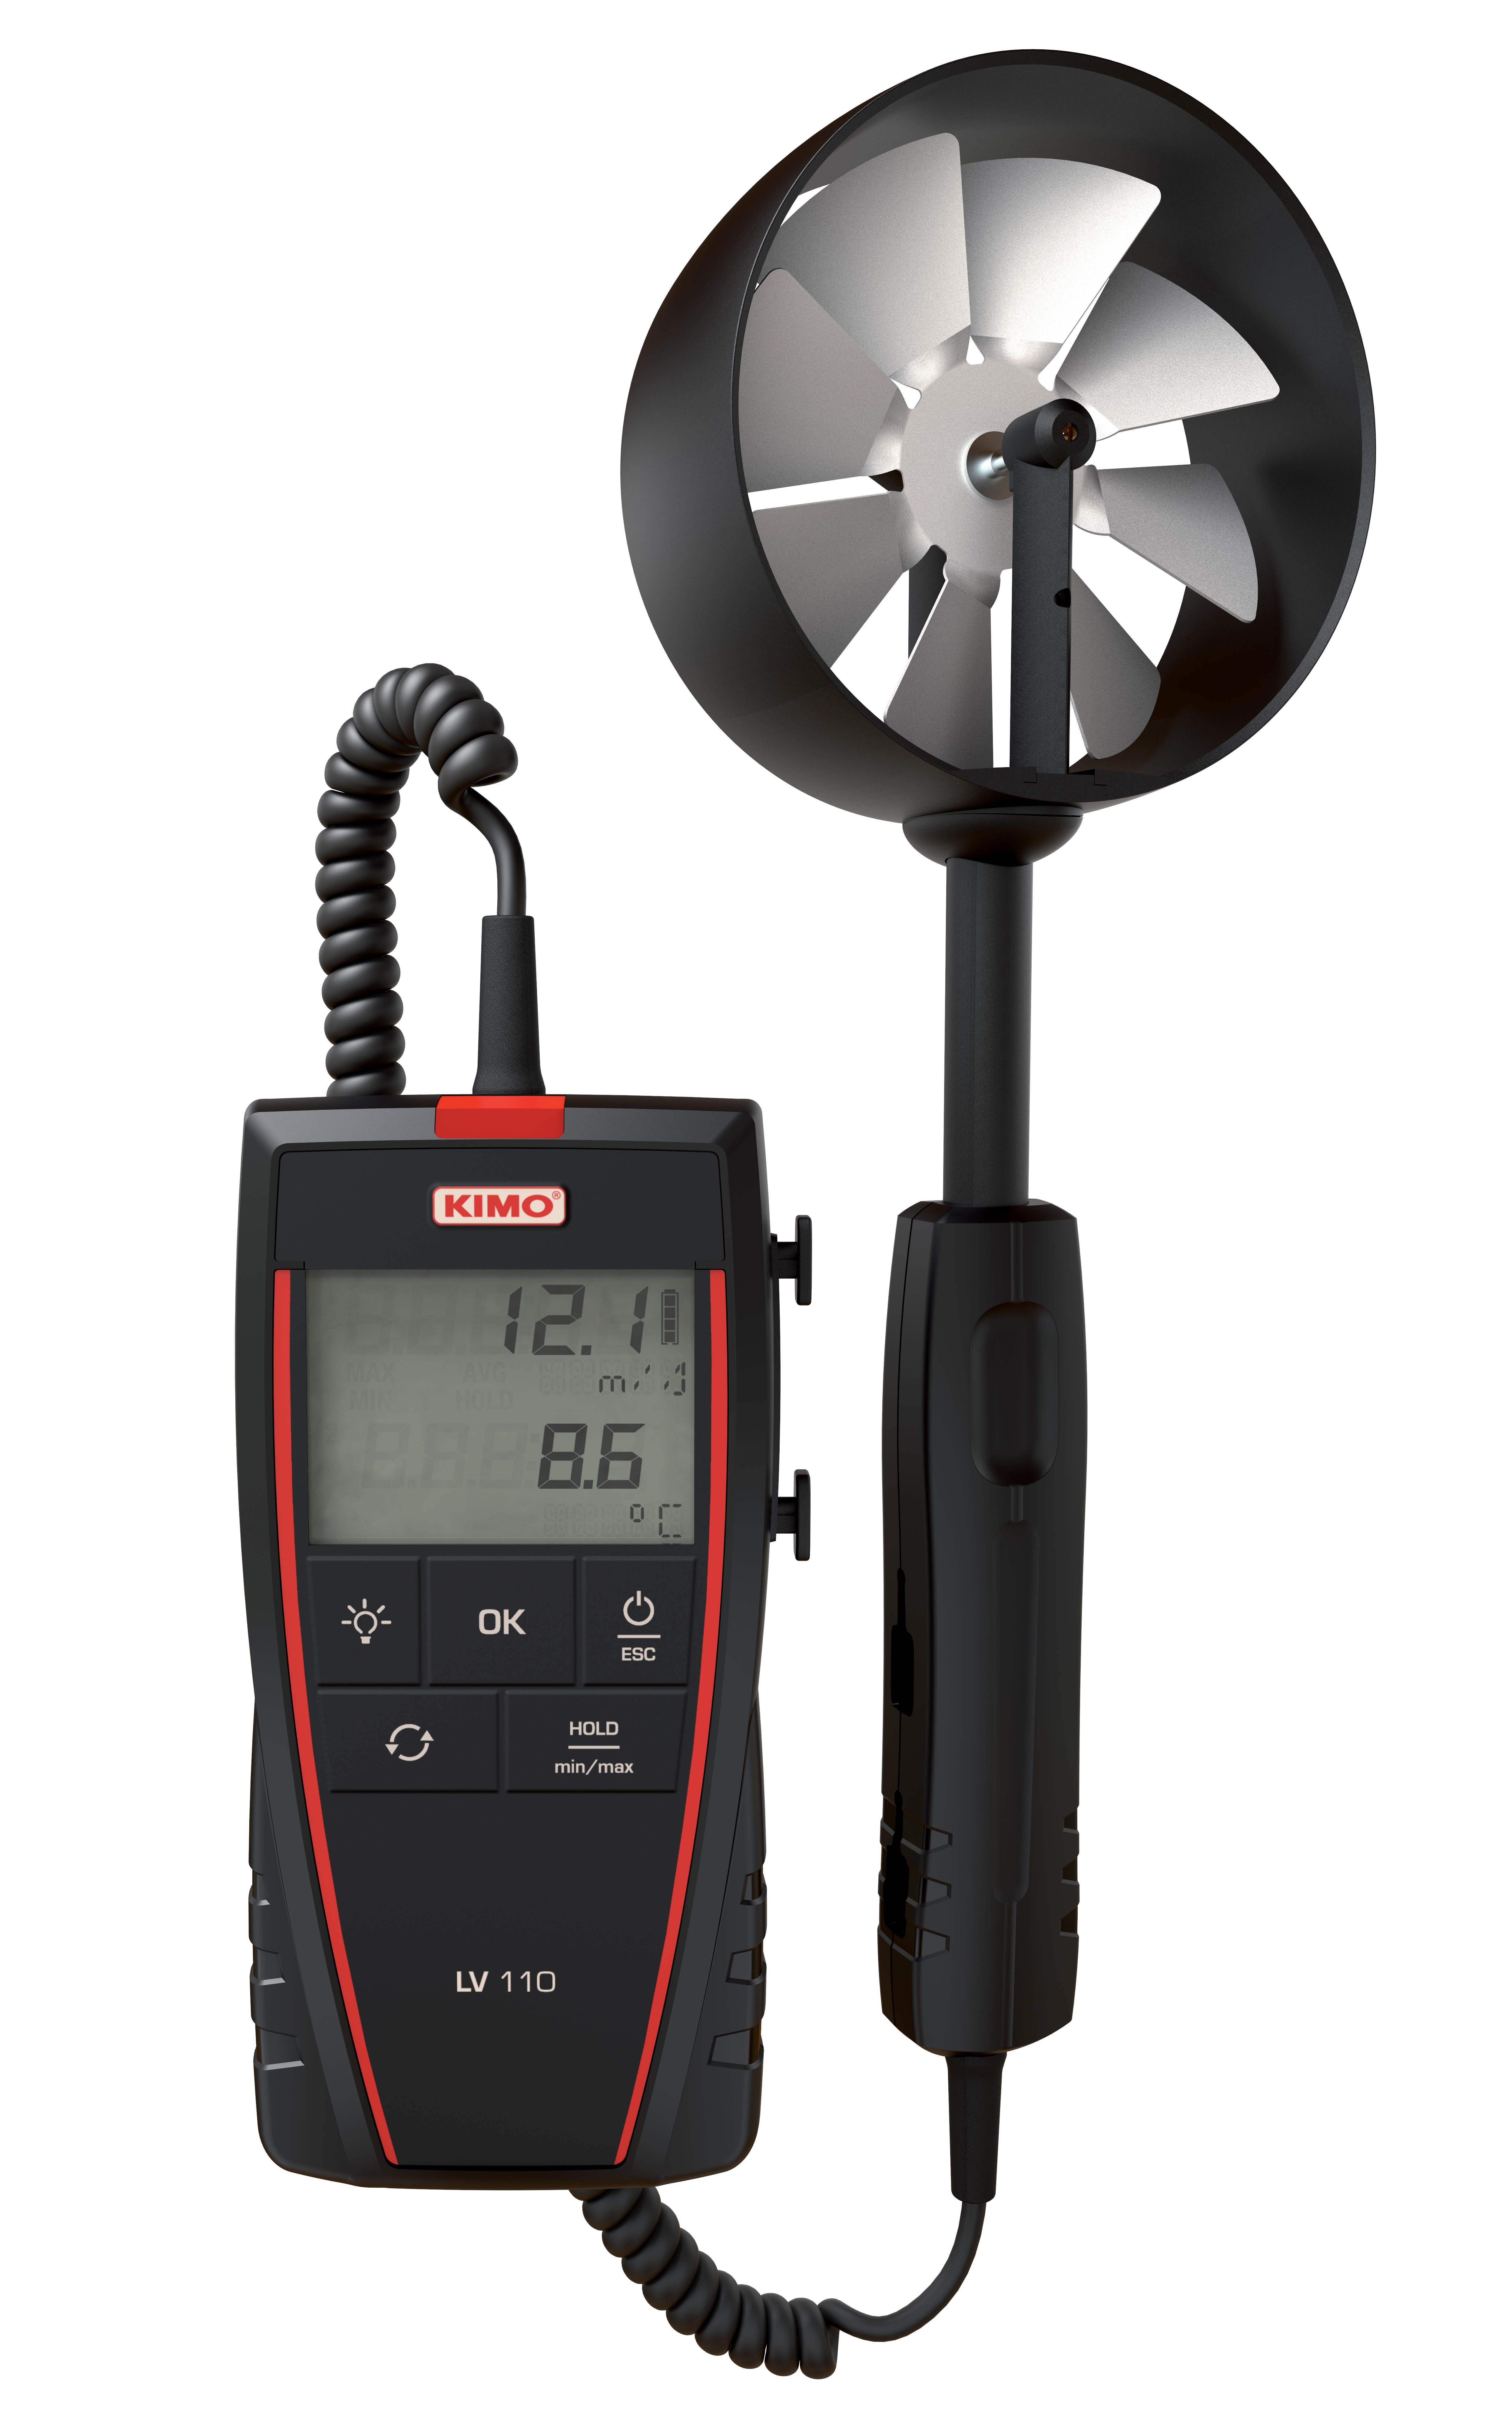 KIMO Rotary Vane Anemometer, 35m/s Max, Measures Air Flow, Air Velocity